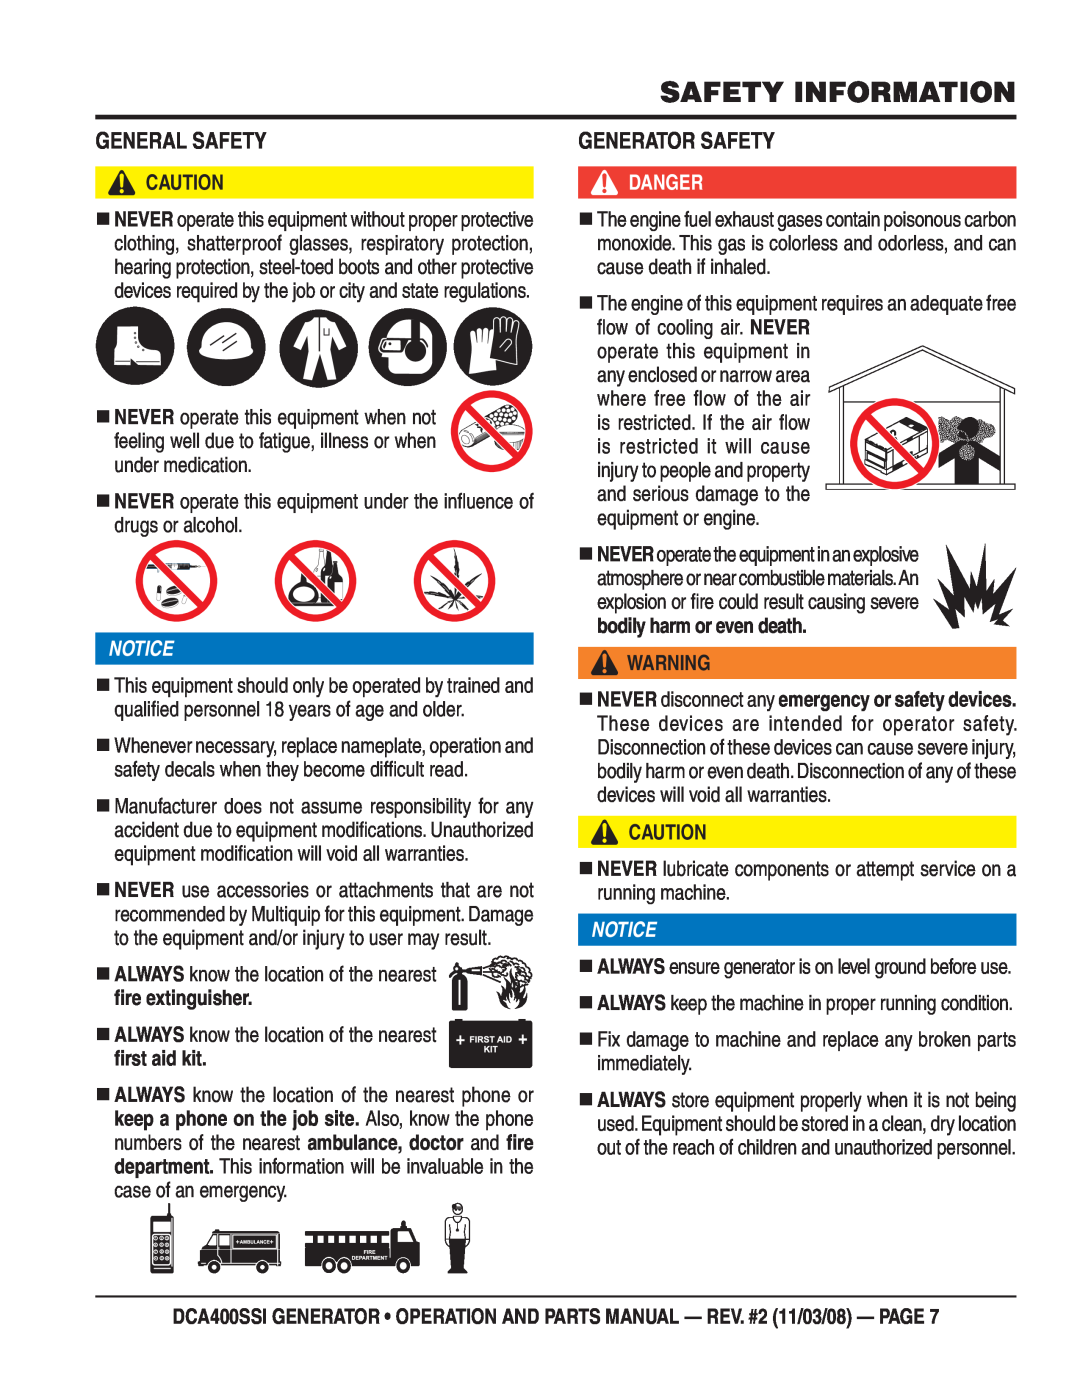 Multiquip DCA400SSI General Safety, Generator Safety, ﬁre extinguisher, ﬁrst aid kit, Safety Information, Notice, Danger 